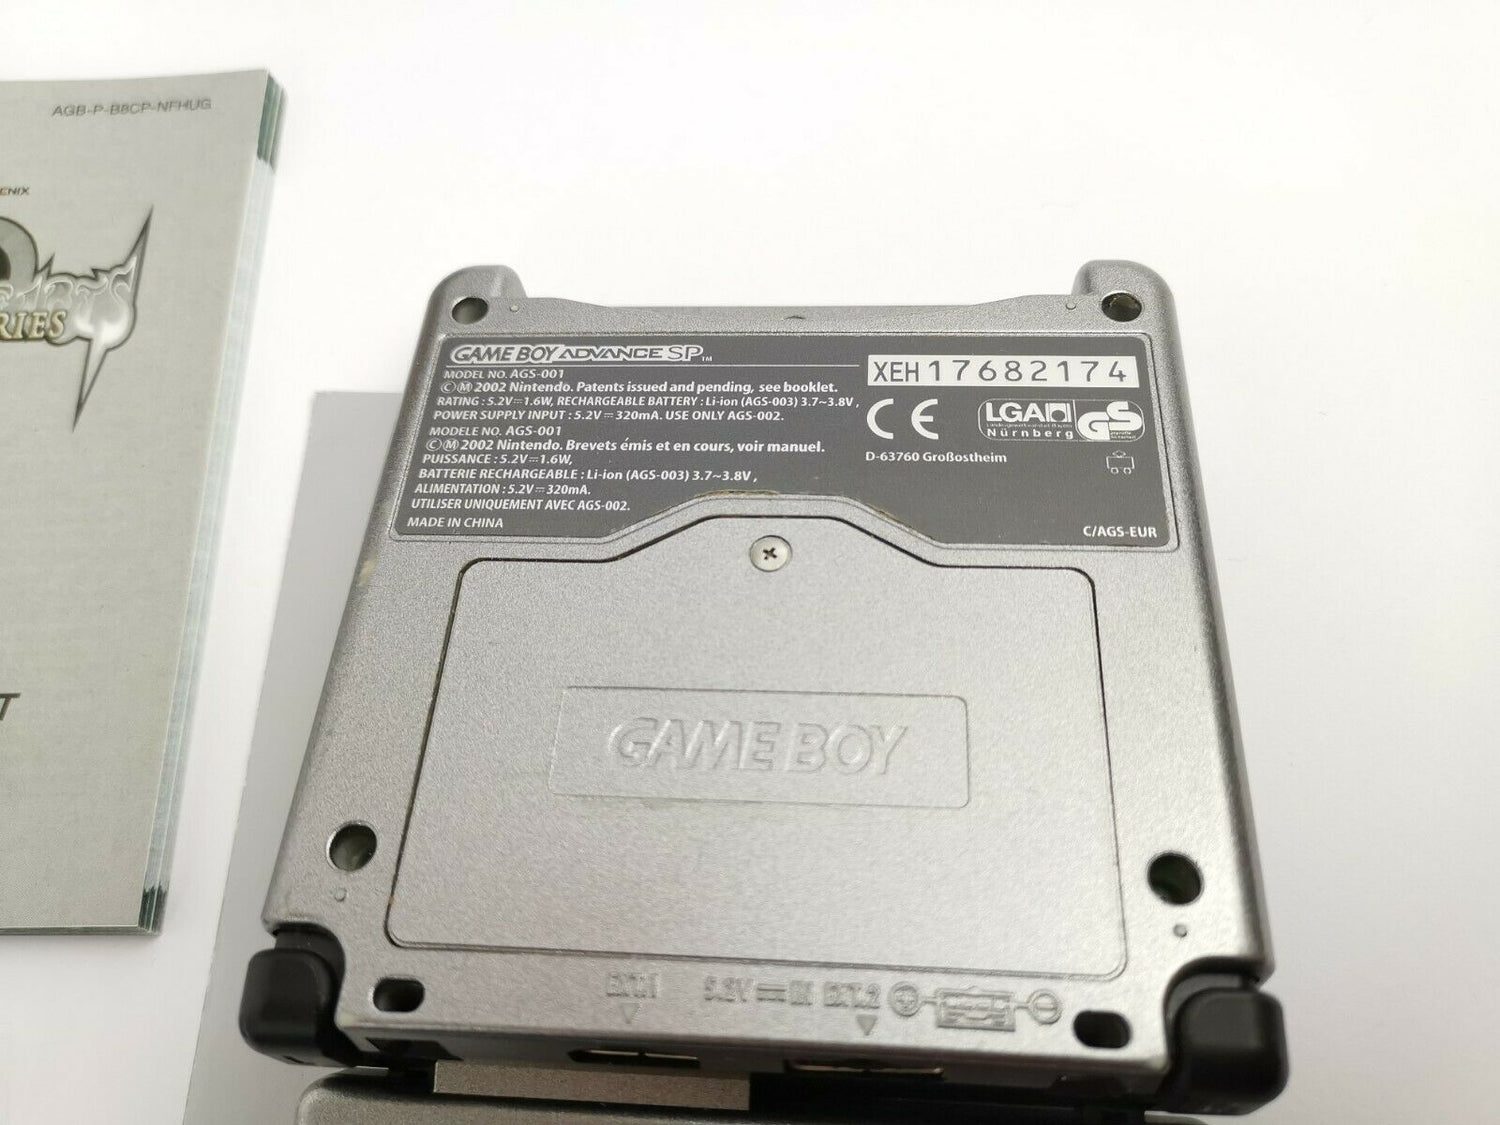 Nintendo Gameboy Advance SP Console 